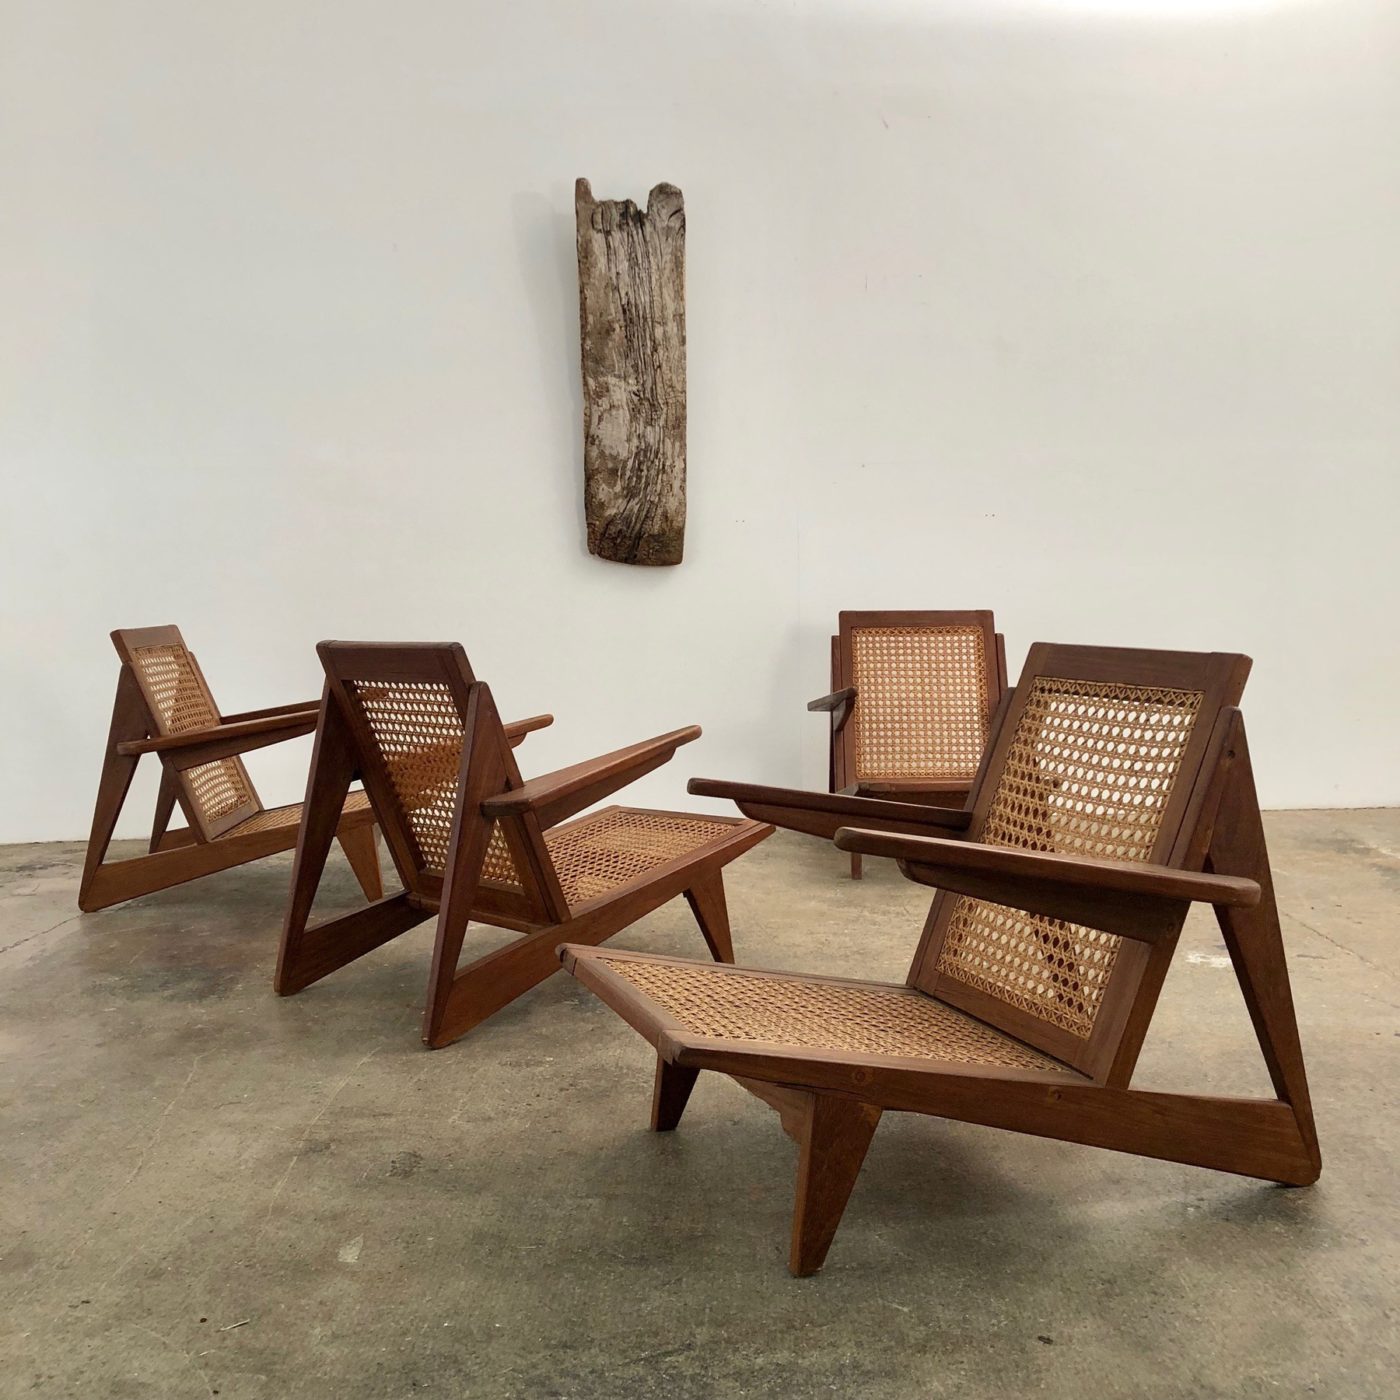 brazilian-cane-chairs0007